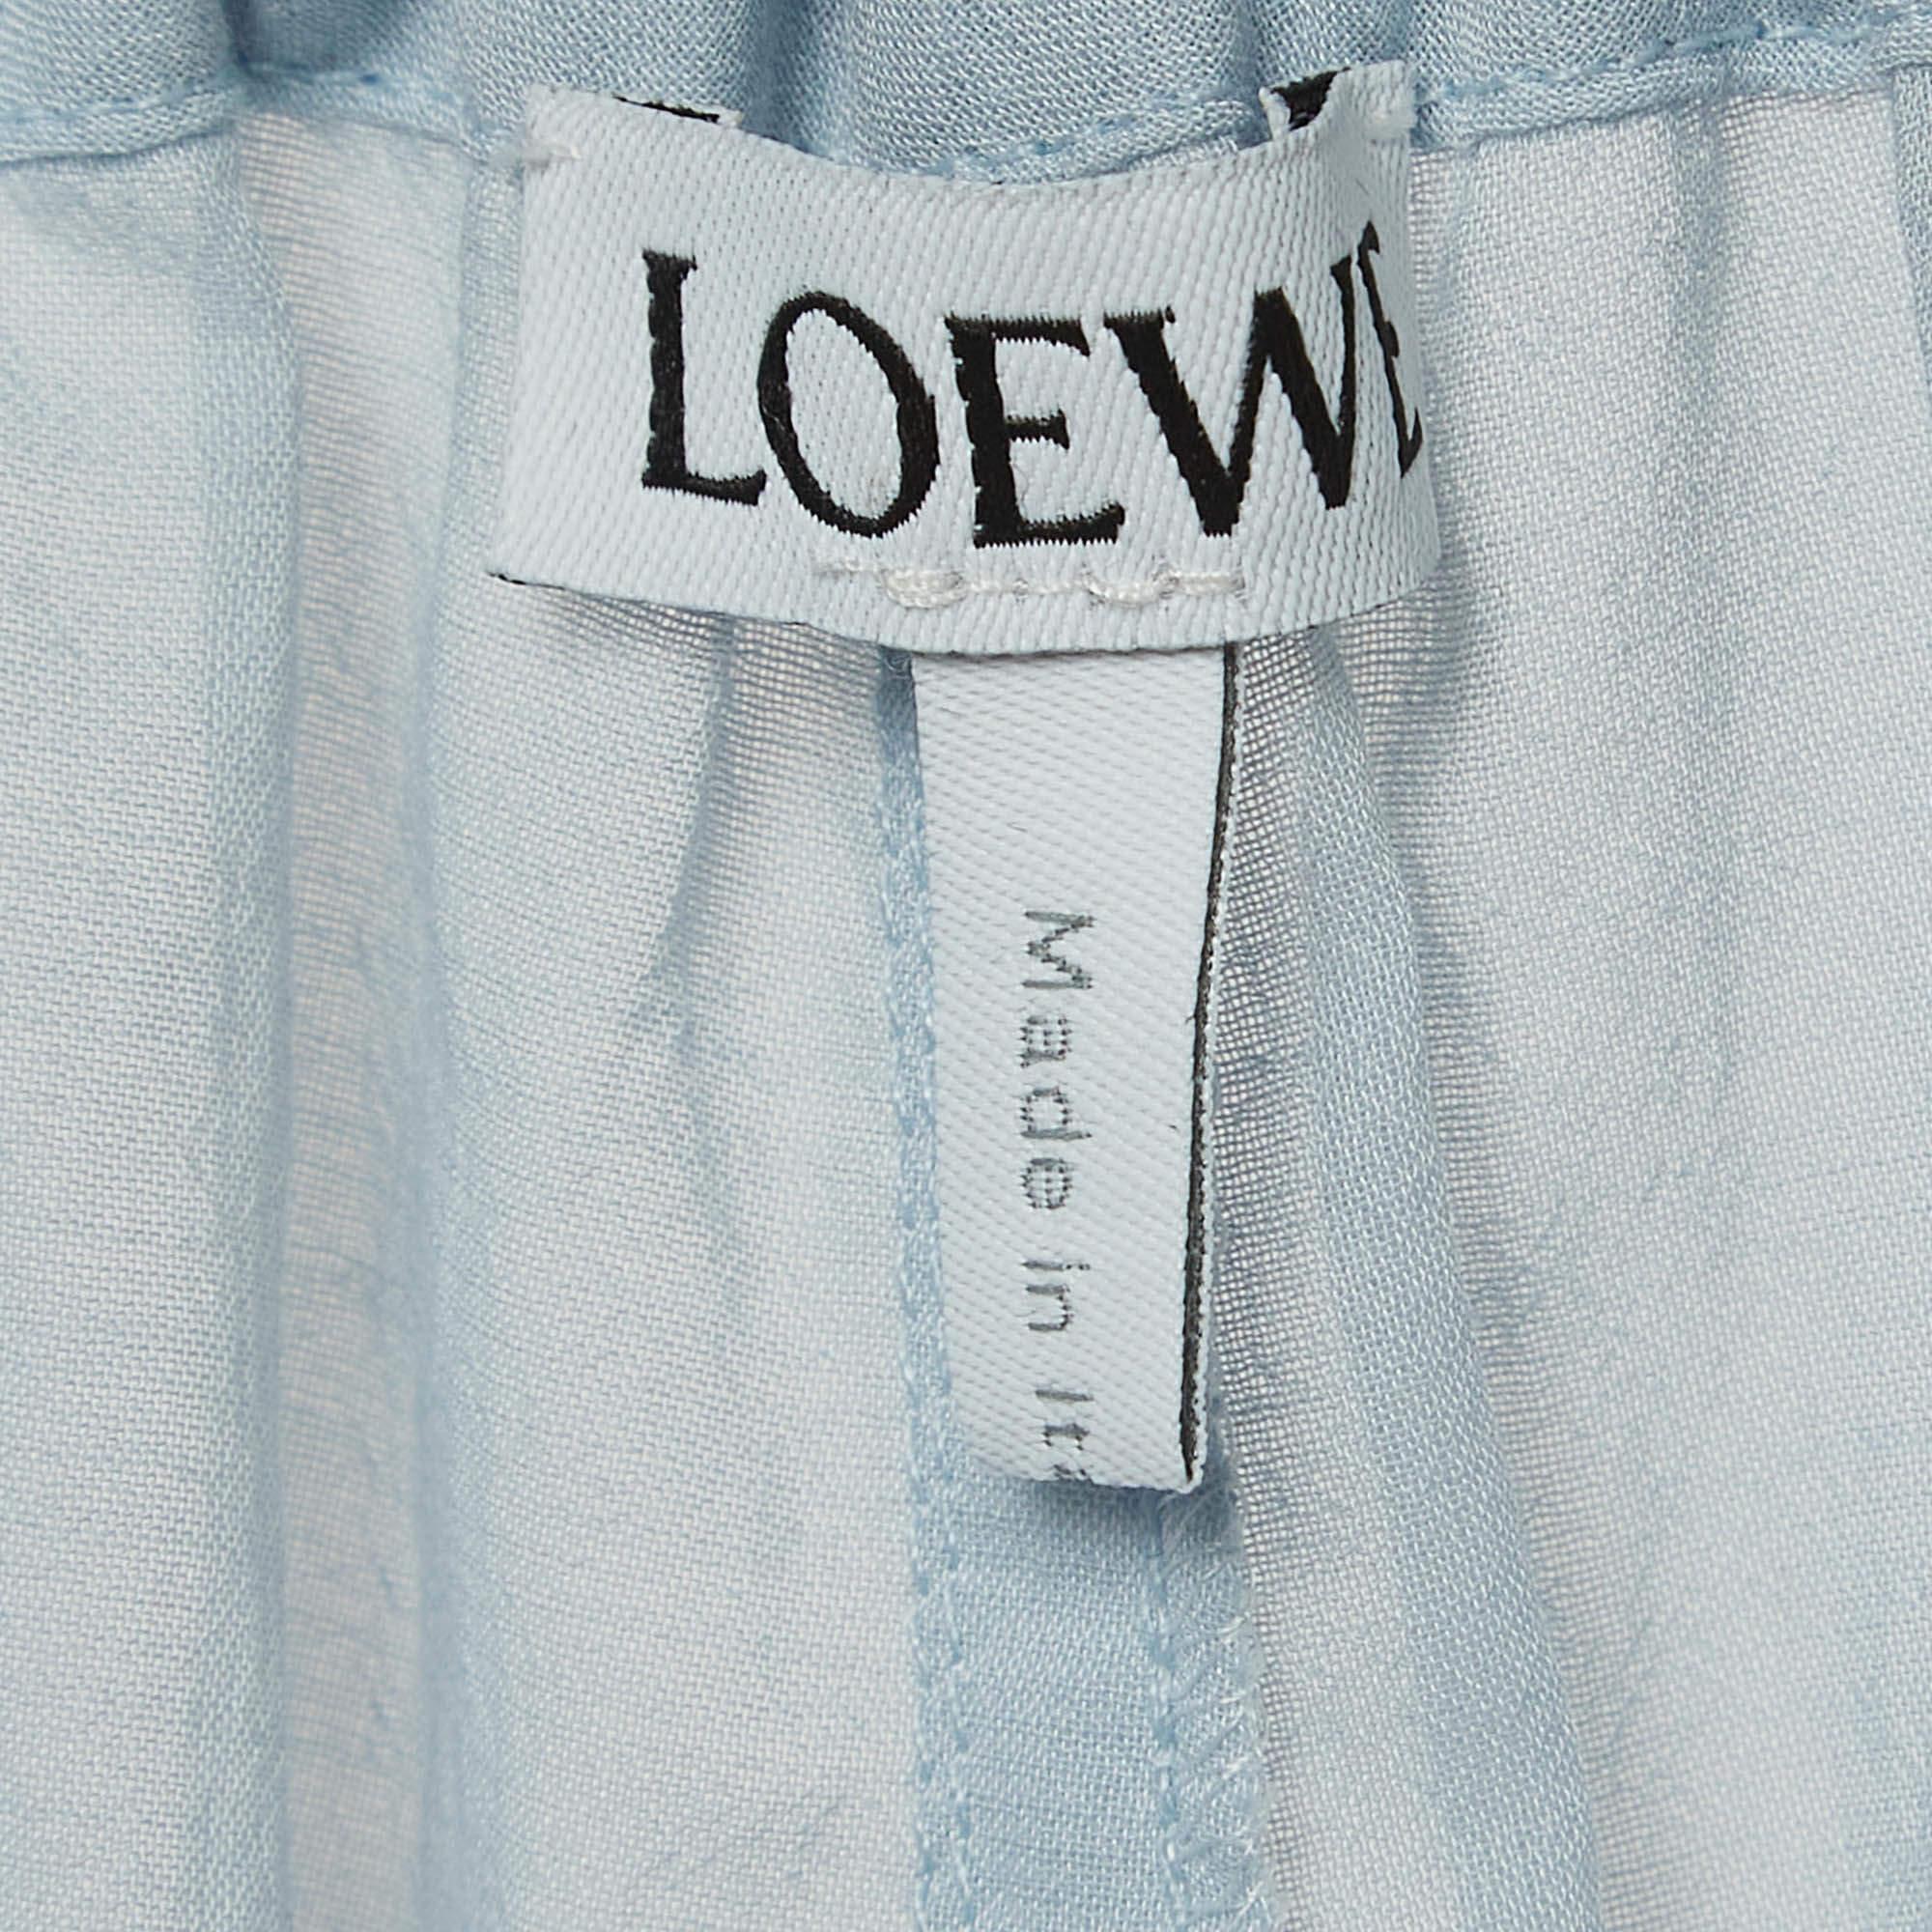 Loewe Blue Cotton Blend Smocked Detail Tie-Up Neck Mini Dress S In New Condition For Sale In Dubai, Al Qouz 2